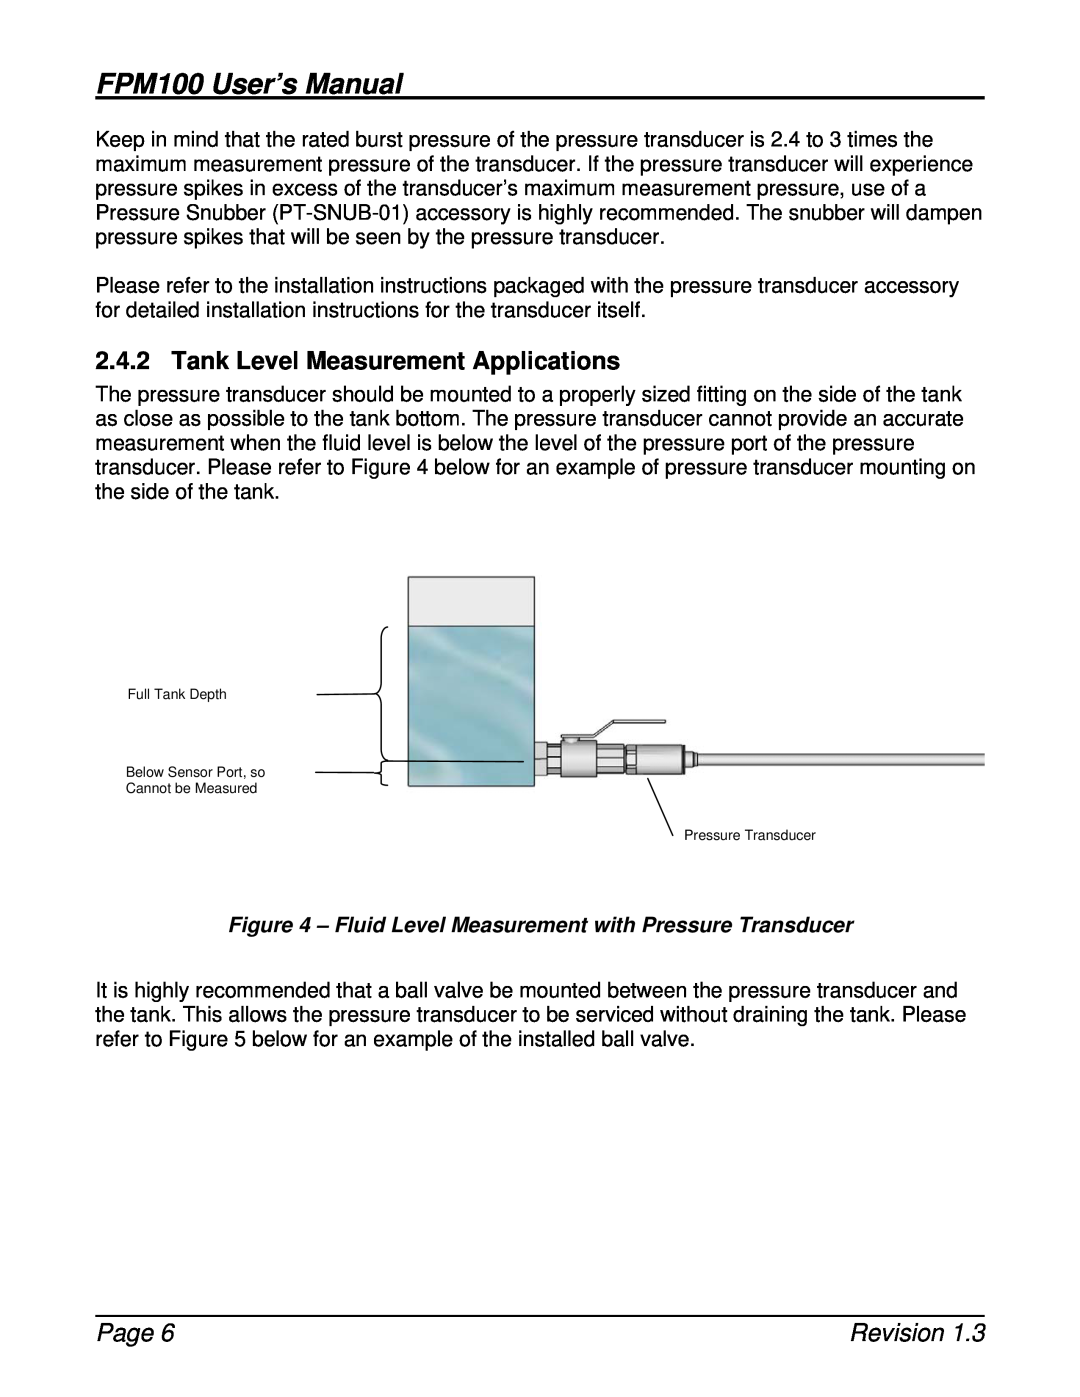 Maretron FPM100 Tank Level Measurement Applications, Fluid Level Measurement with Pressure Transducer, Page, Revision 